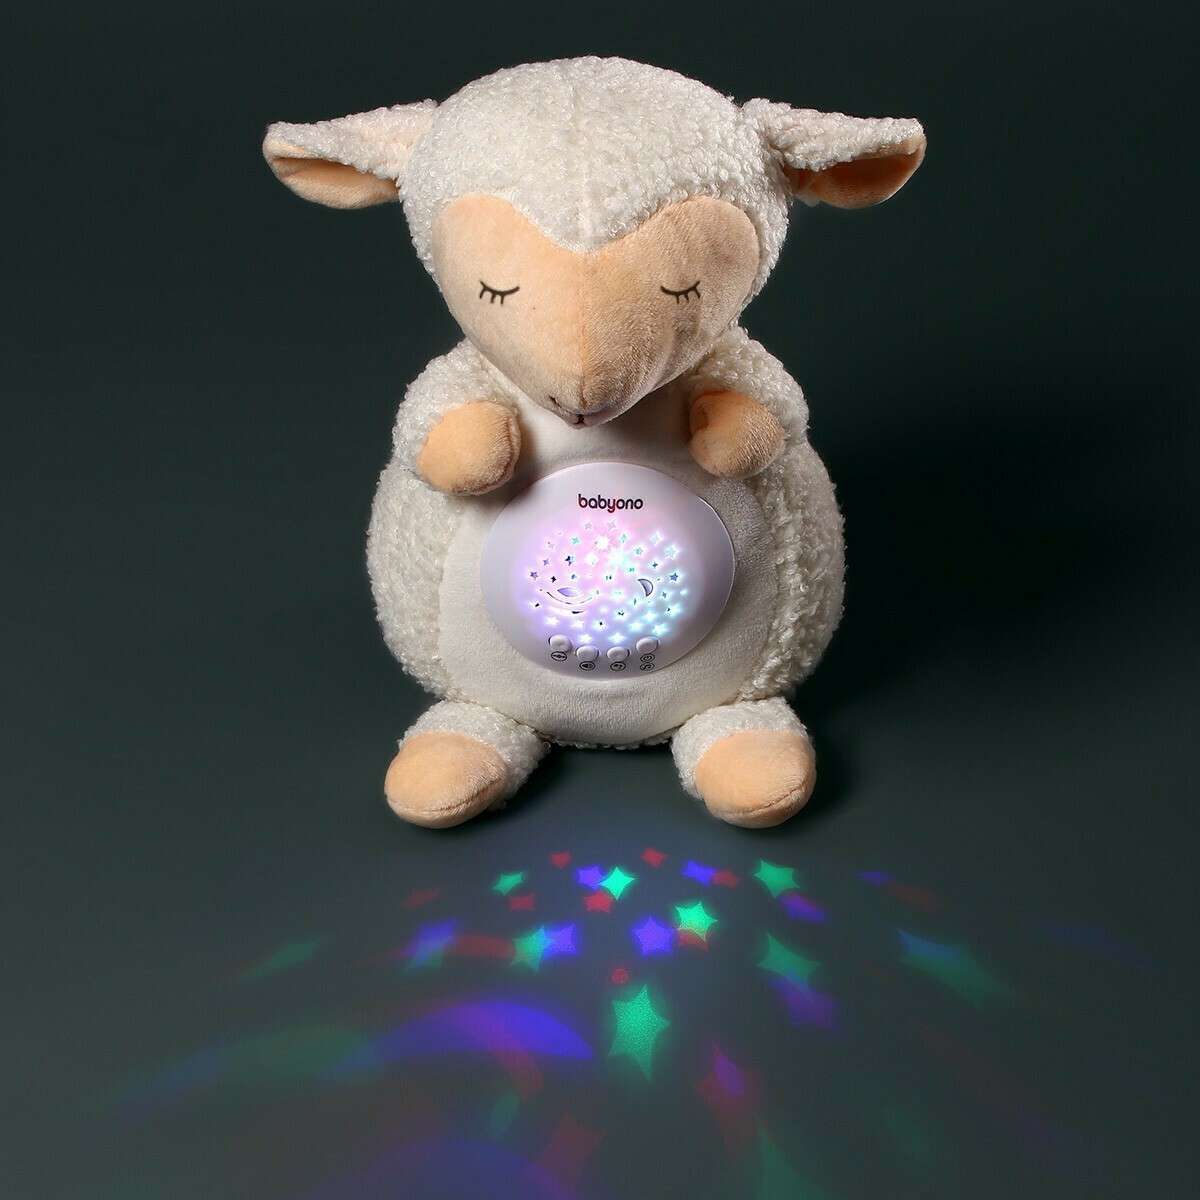 babyono bn596 sheep scarlet toy projector 5806 2fta